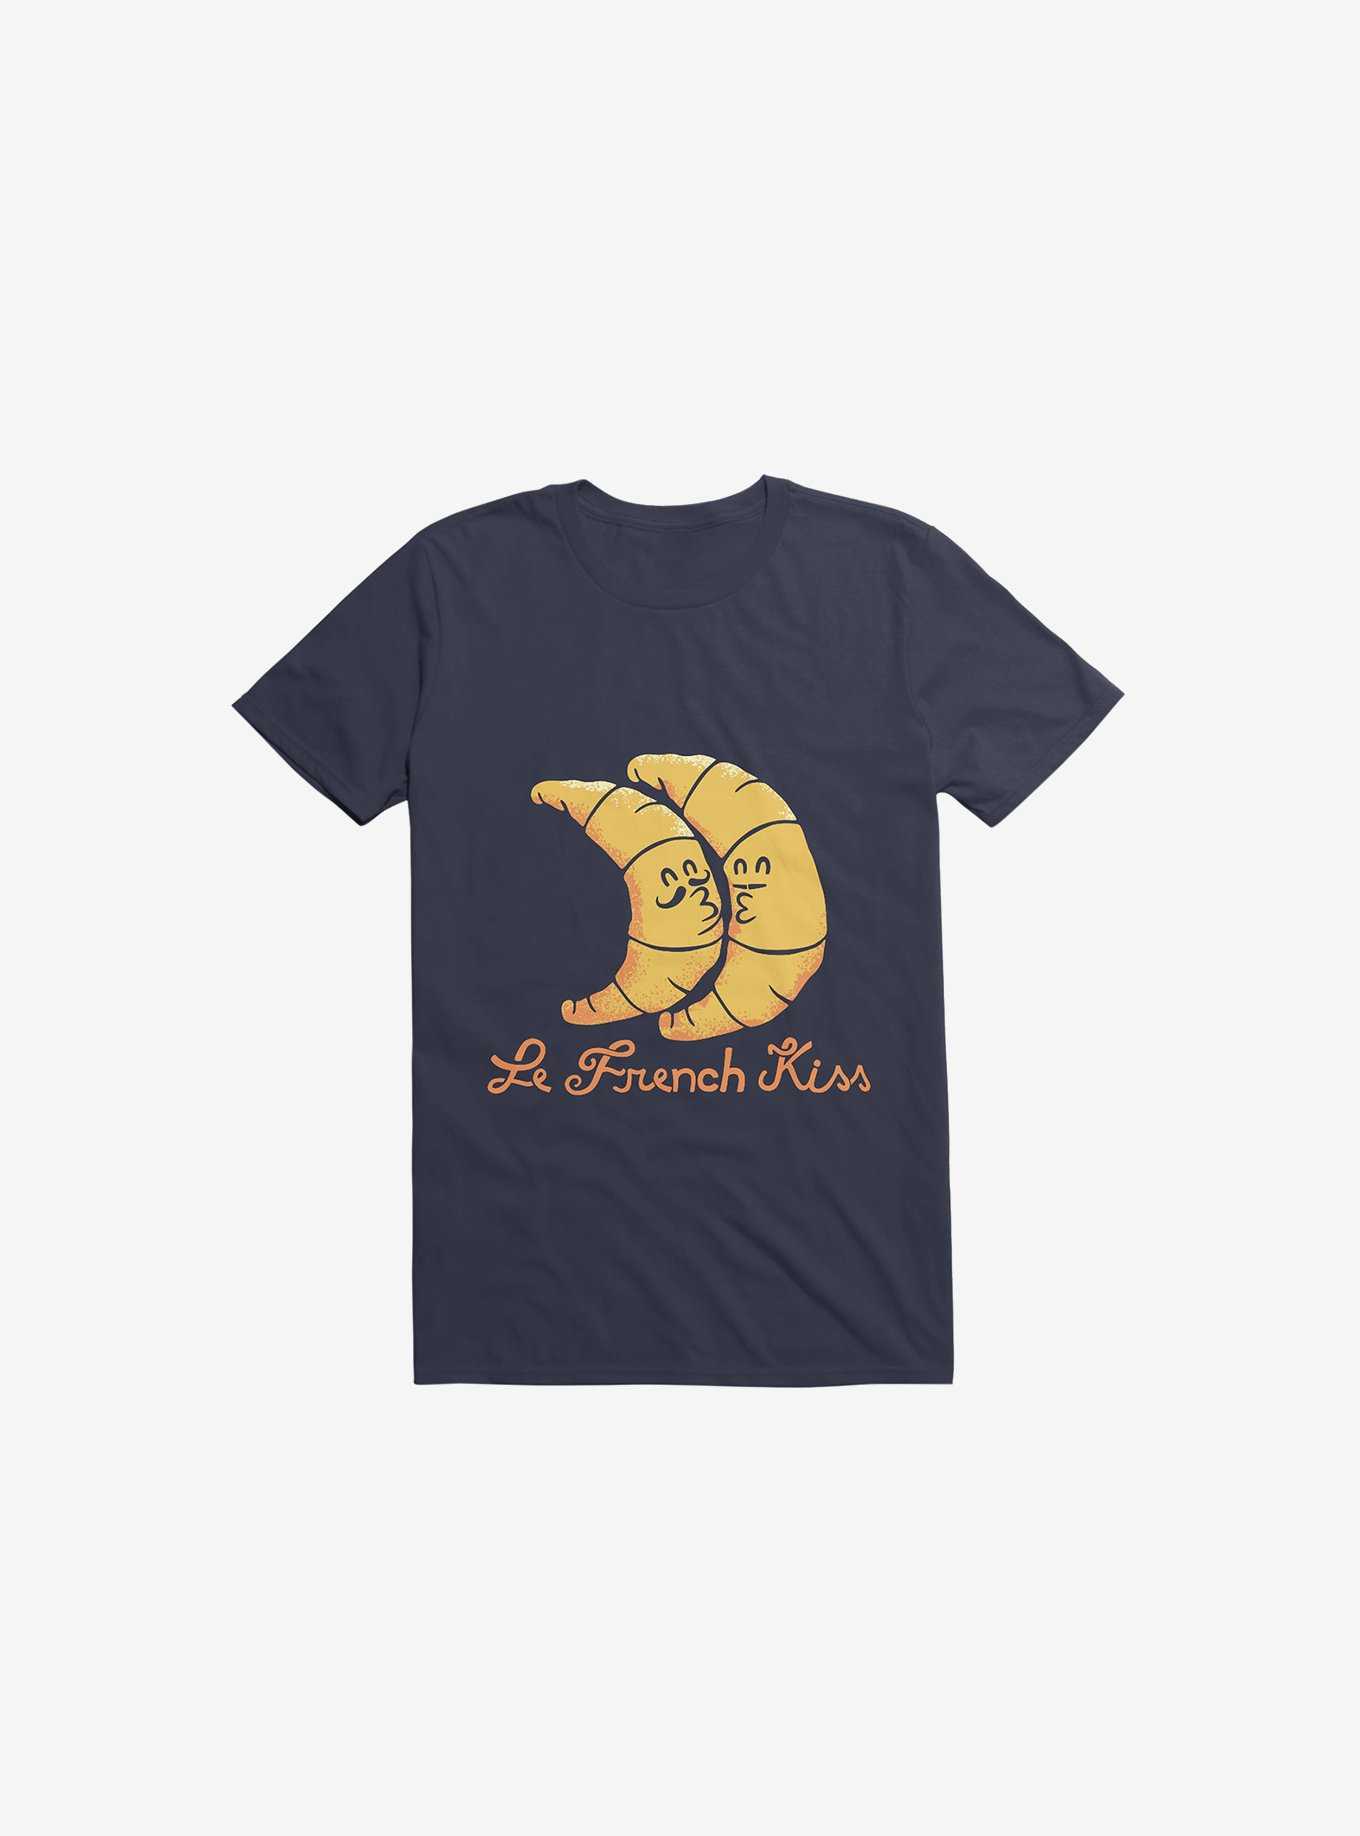 French Kiss 2.0 Navy Blue T-Shirt, , hi-res